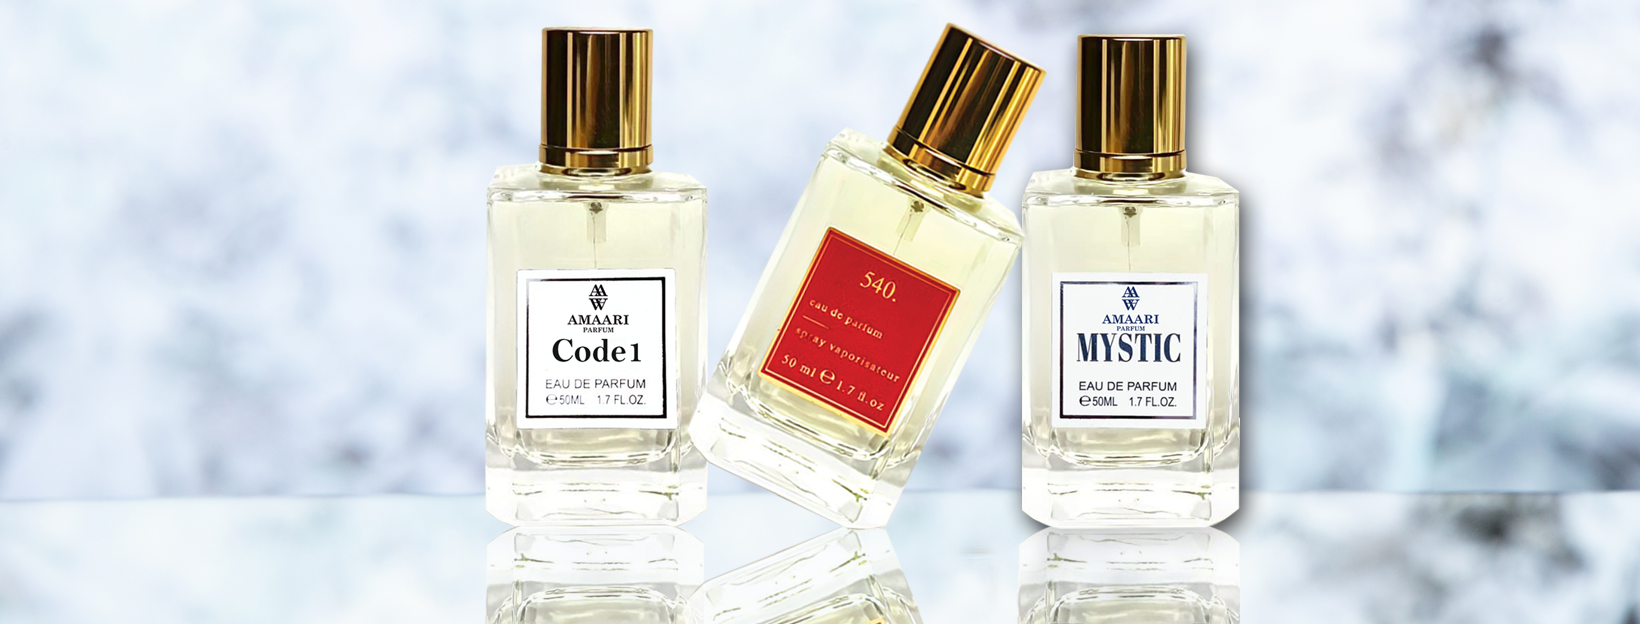 Perfume Shop | Designer brands at discounted prices | Amaari Parfum